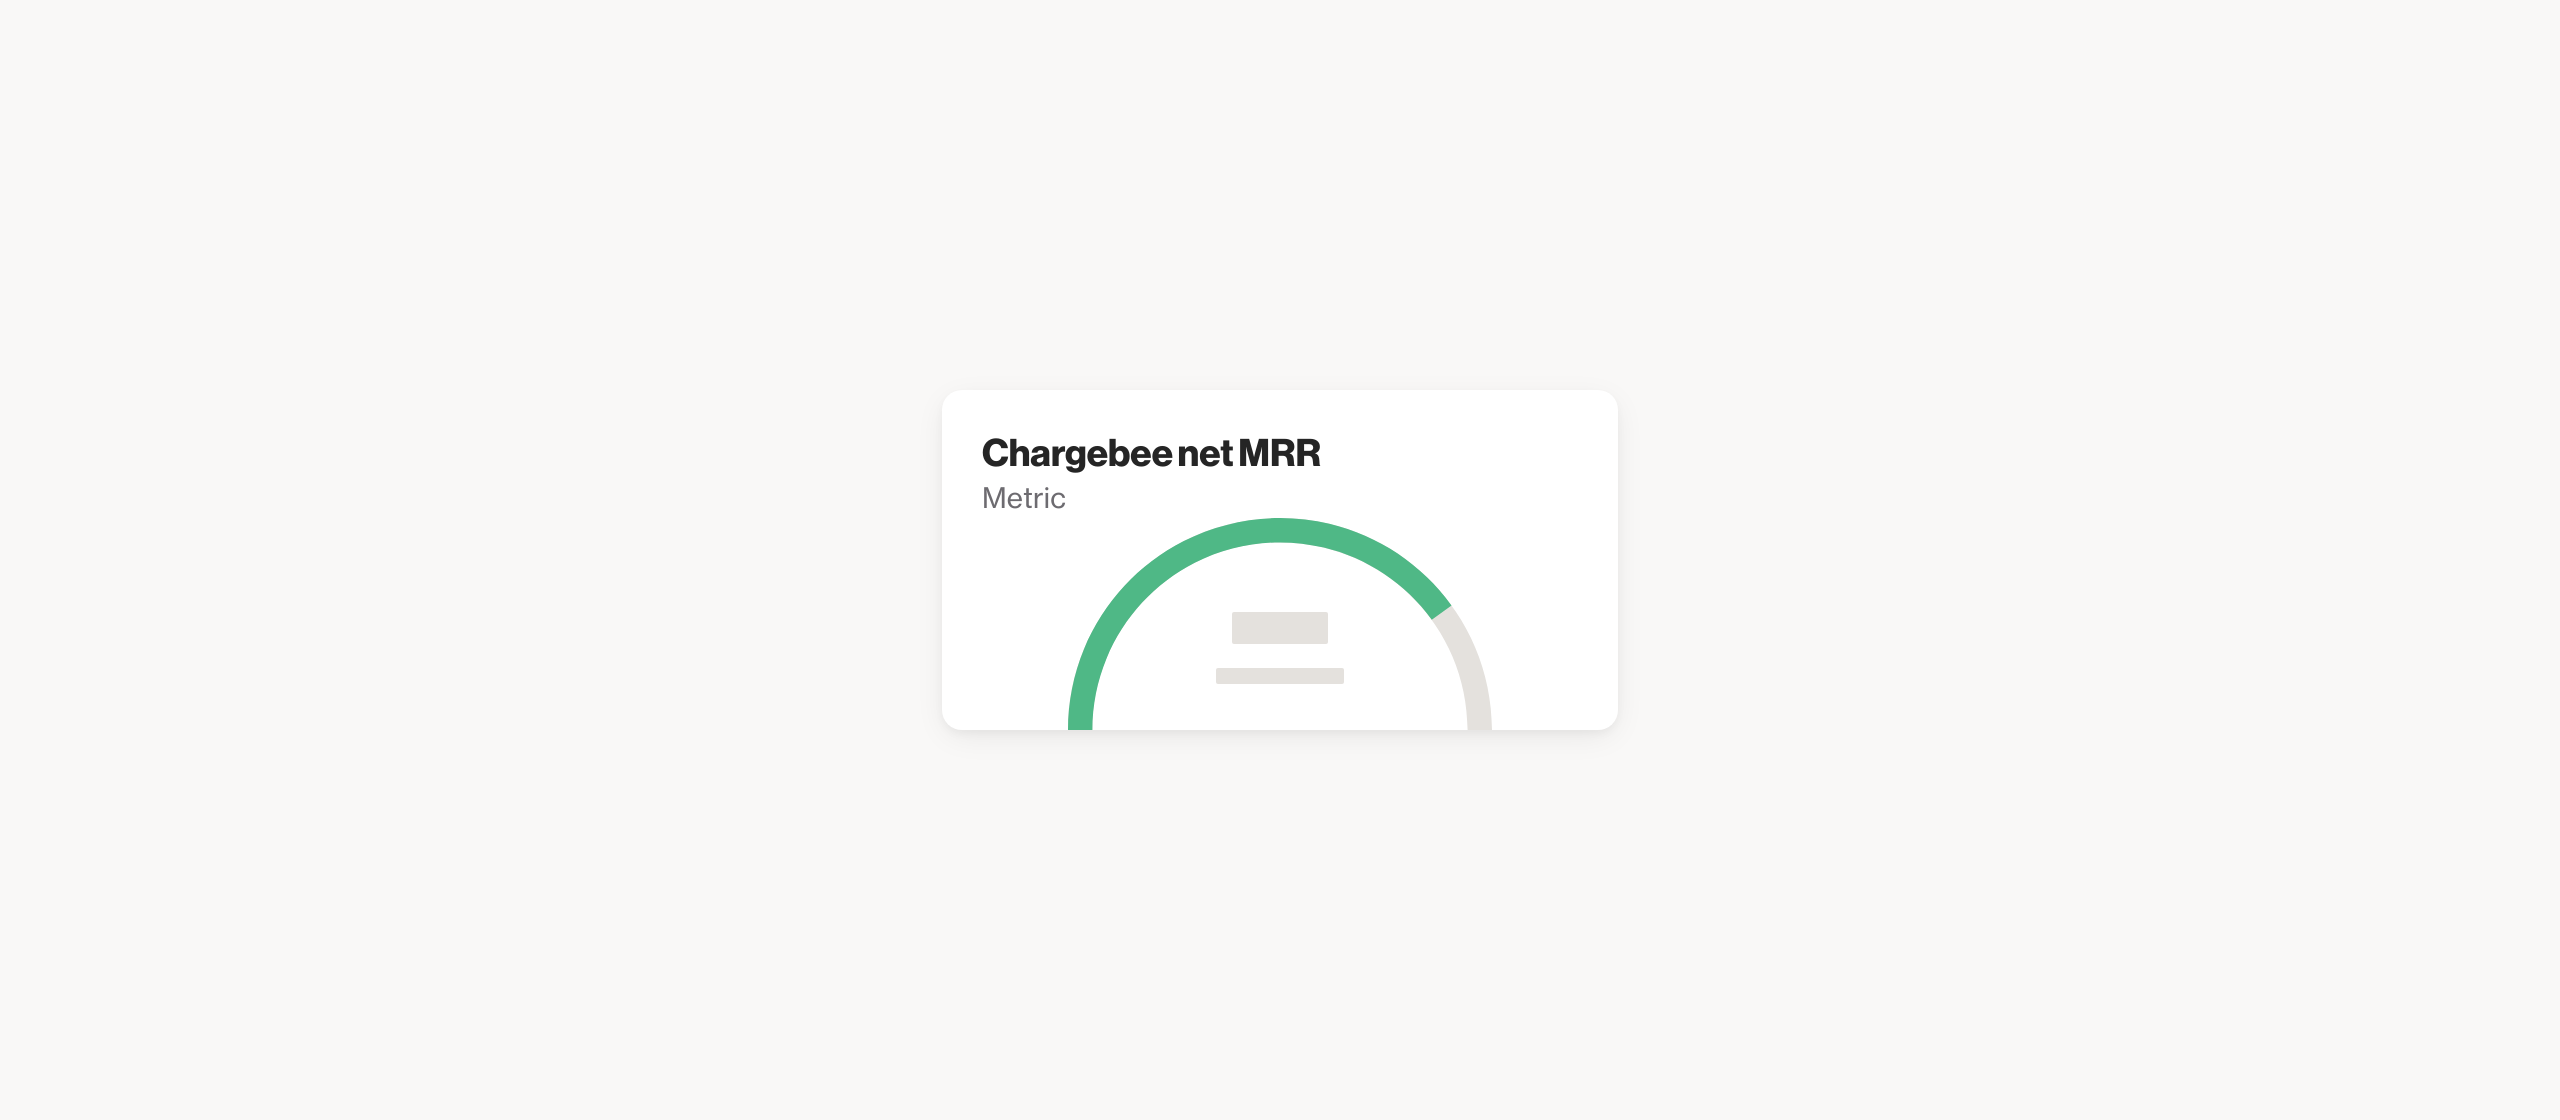 Chargebee Net MRR metric